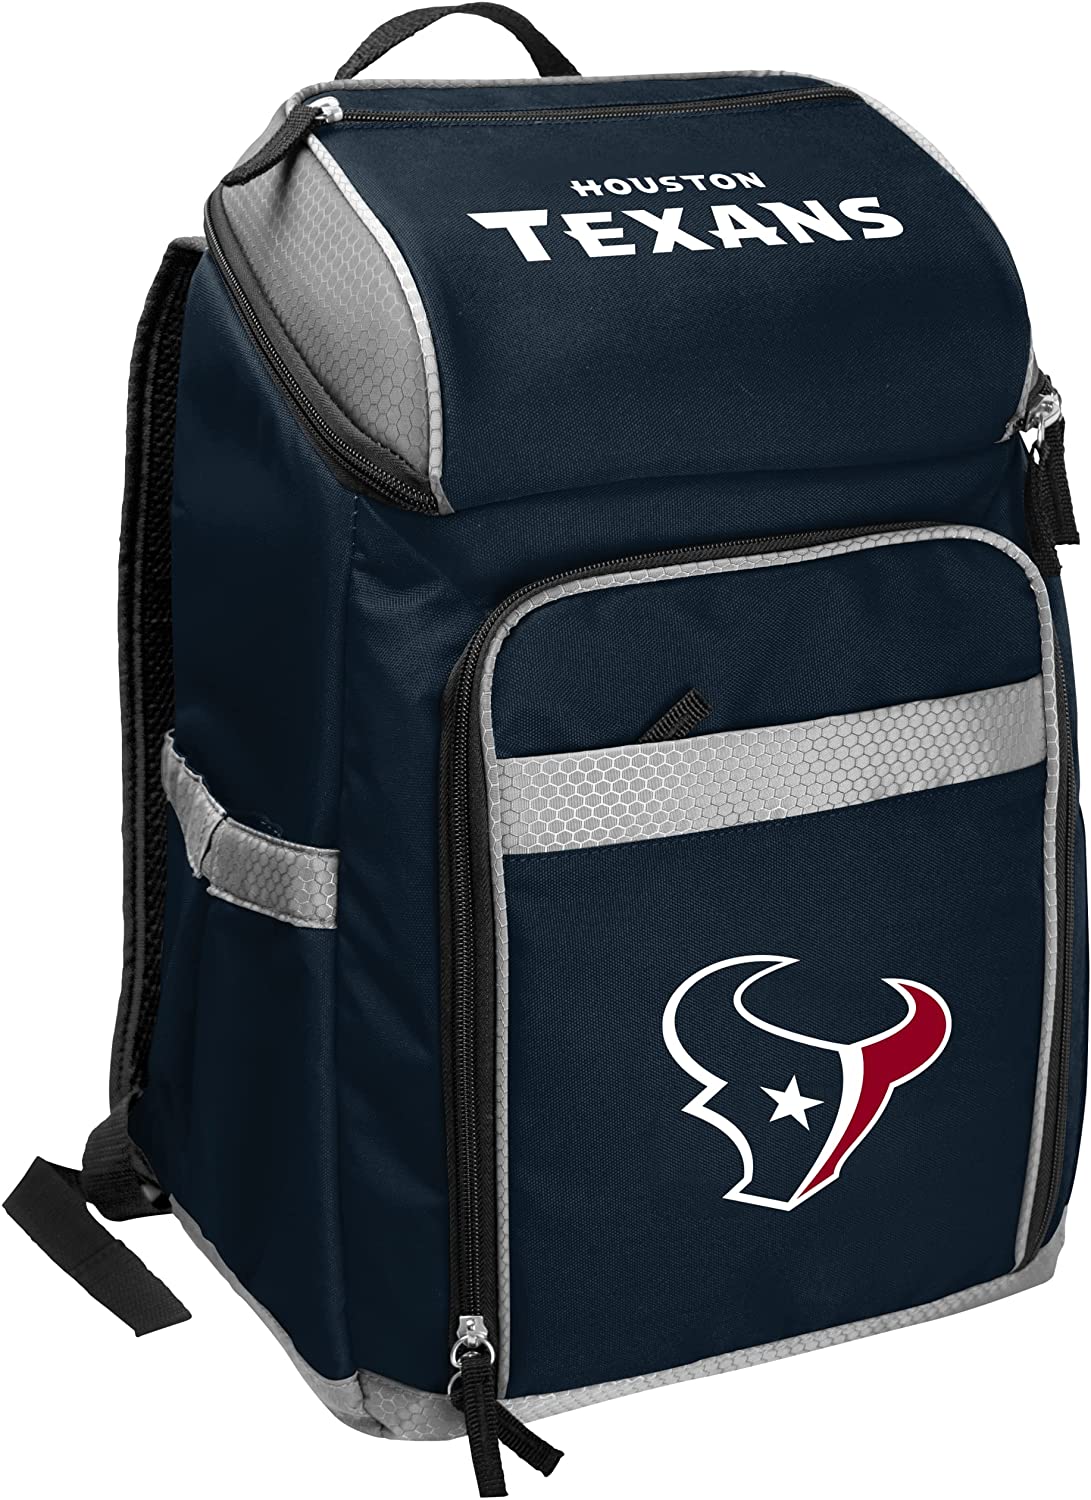 Houston Texans NFL Soft-Sided Backpack Cooler 